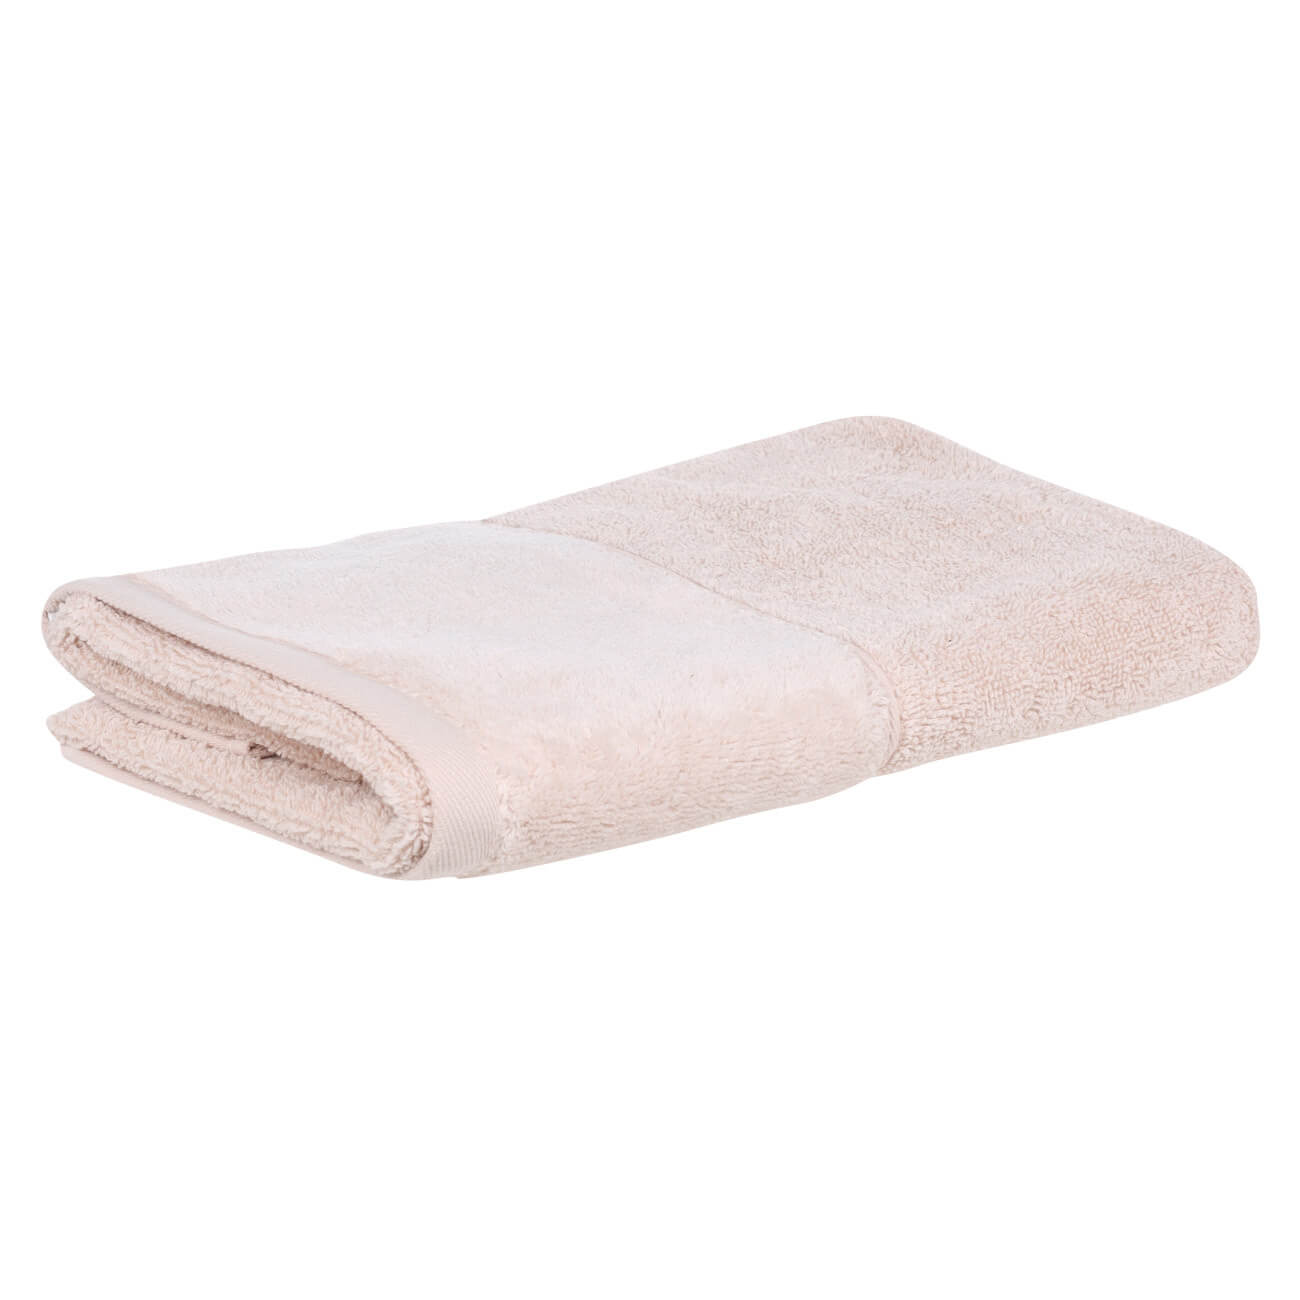 Полотенце, 50х90 см, хлопок, бежевое, Velvet touch набор для полотенце уголок рукавица